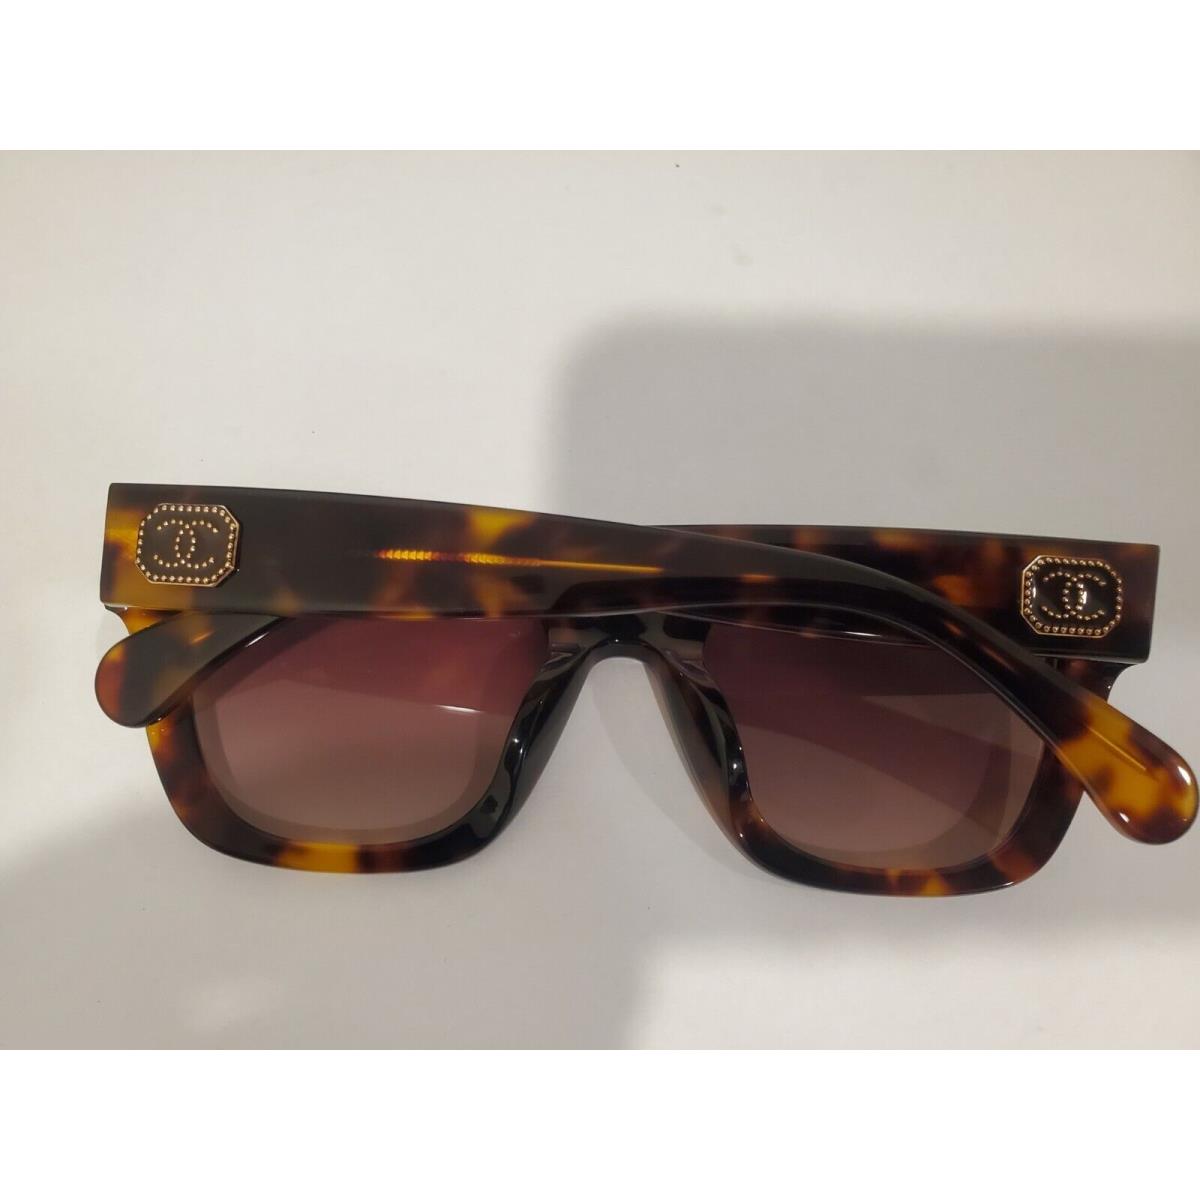 Chanel 5478 Sunglasses (Brown/Brown - Square - Women)